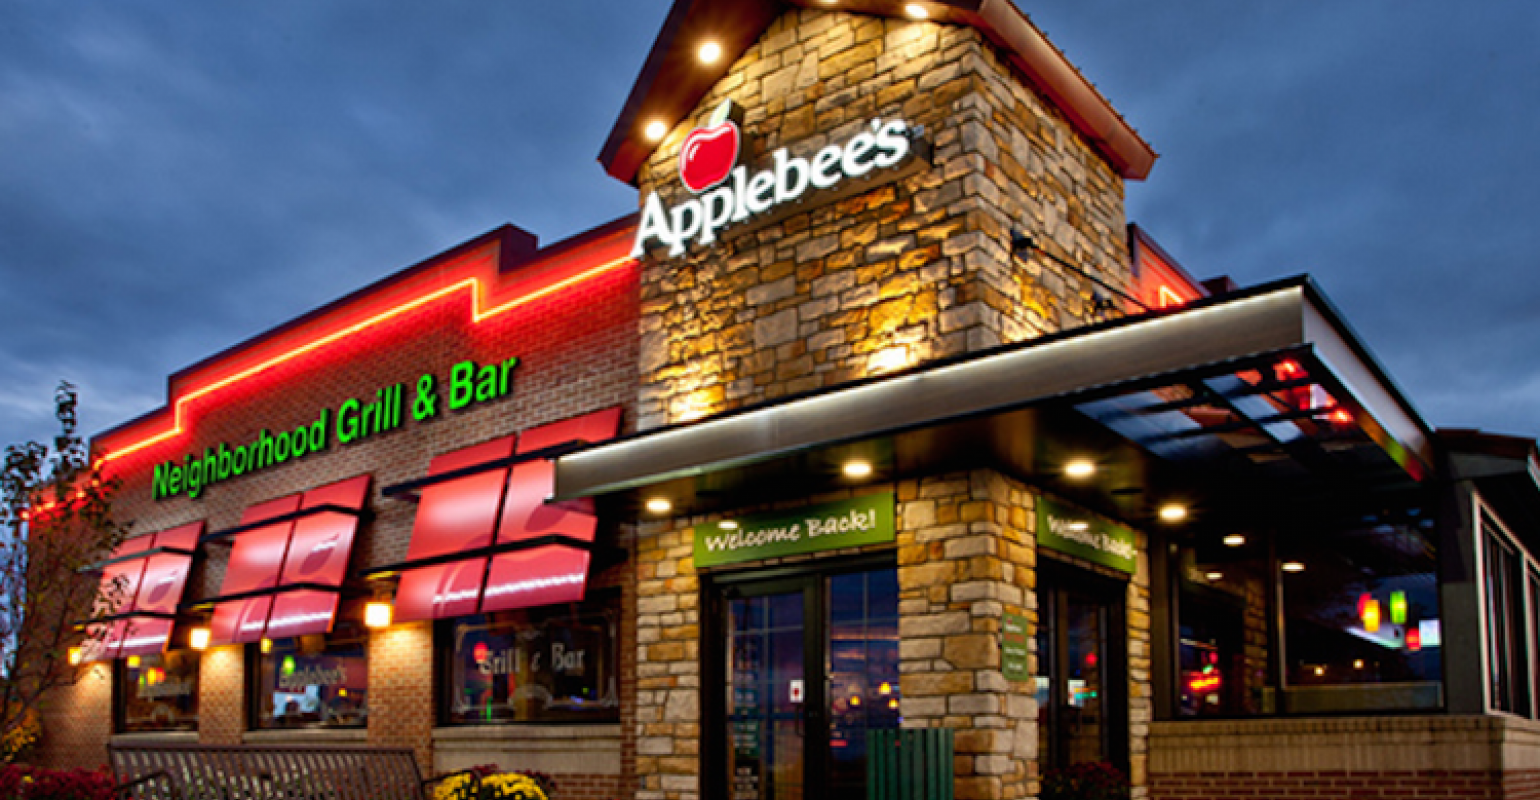  Applebee s President Full service Restaurants Have A Bright Future 